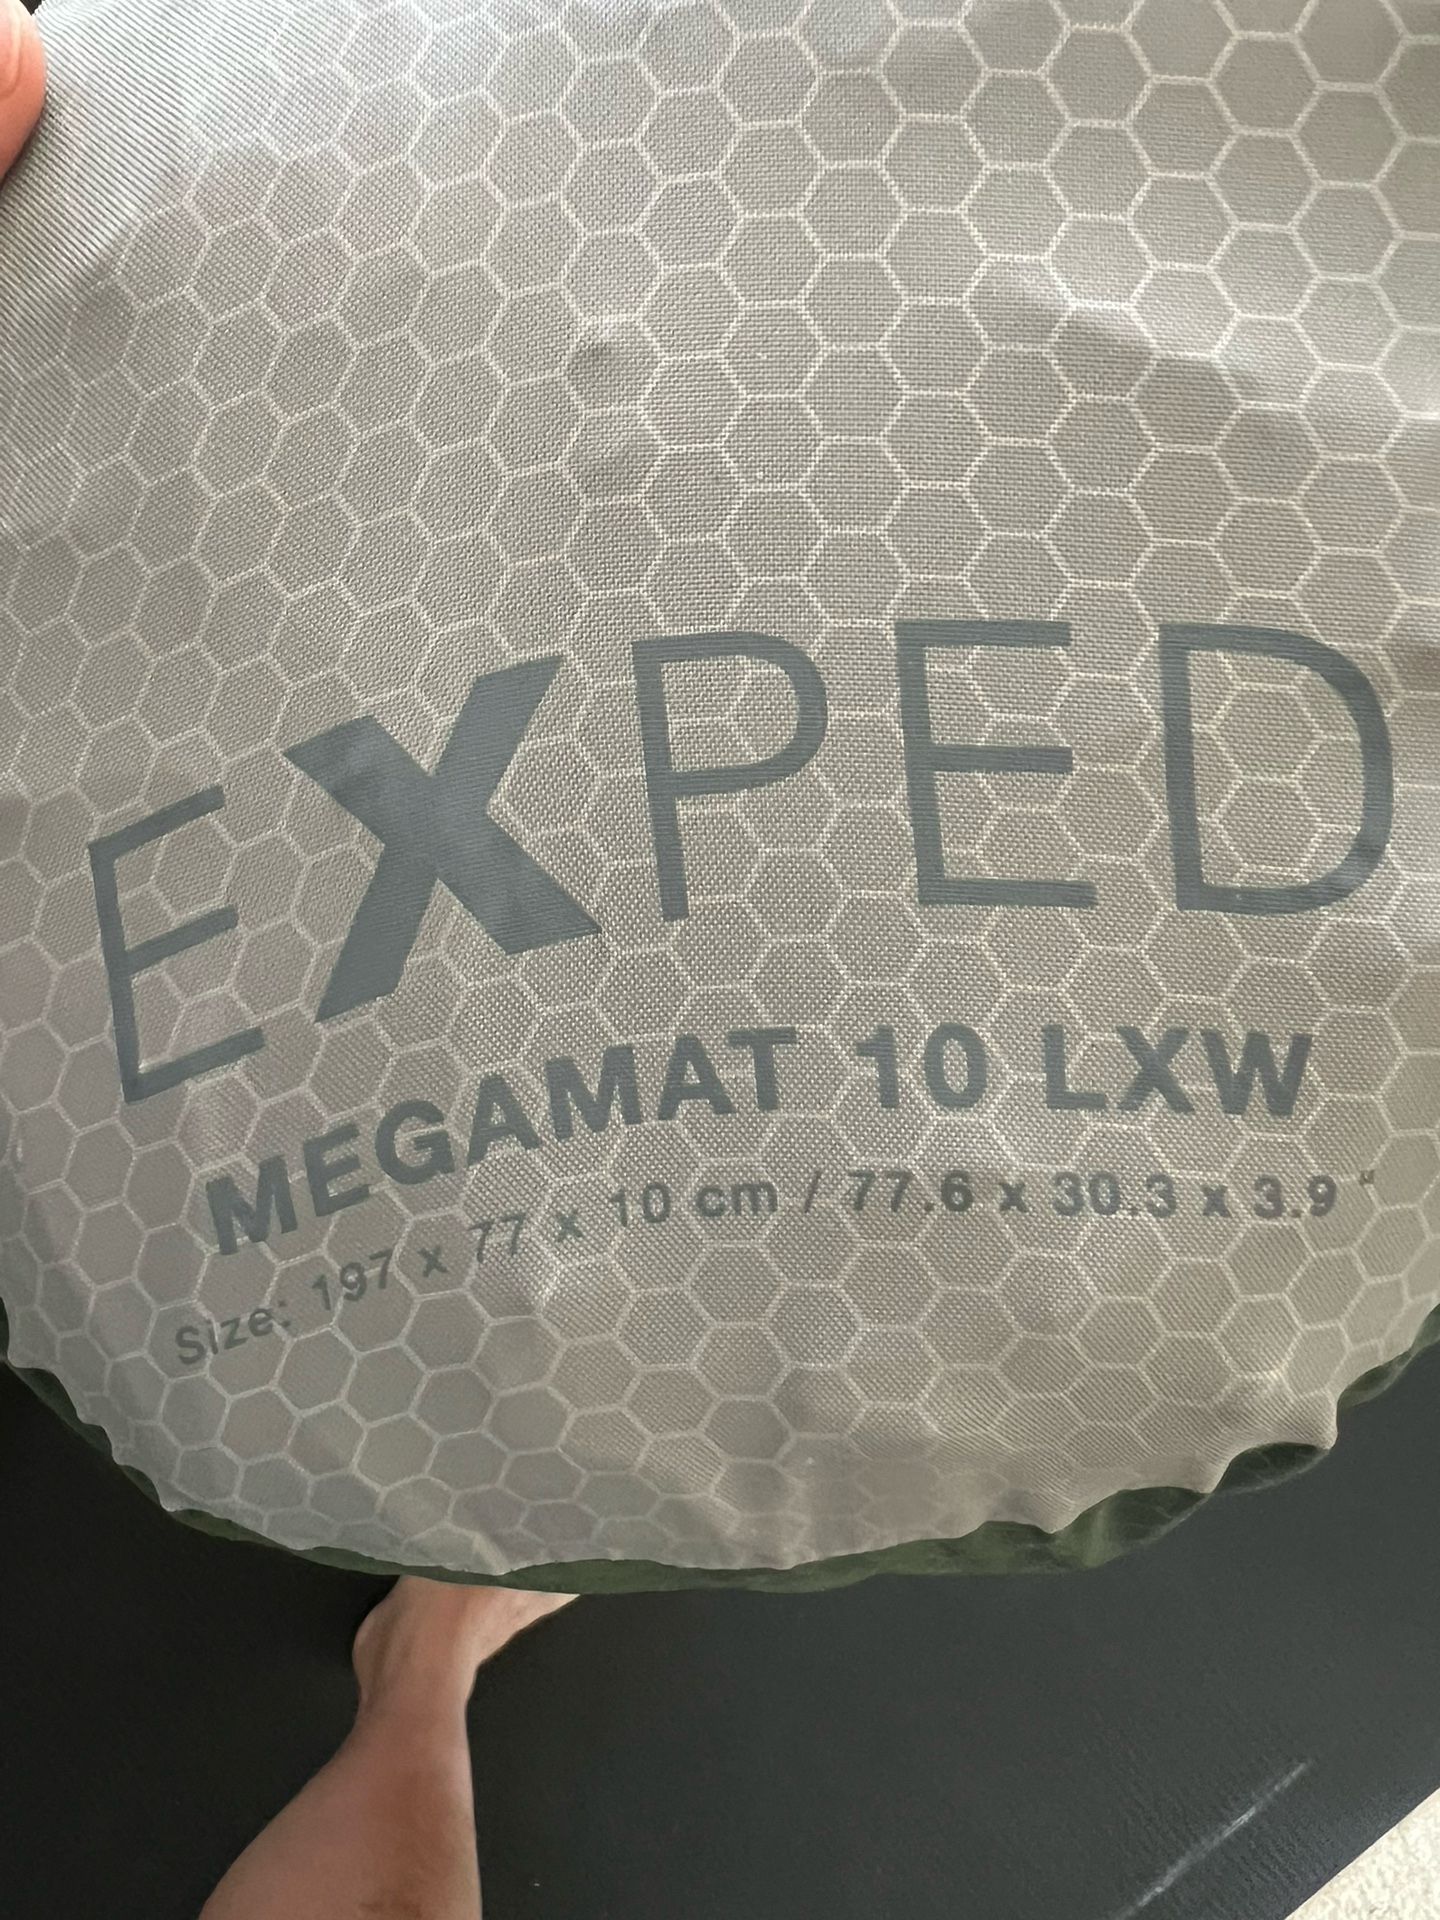 Exped megamat 10 XL Inflatable Mattress